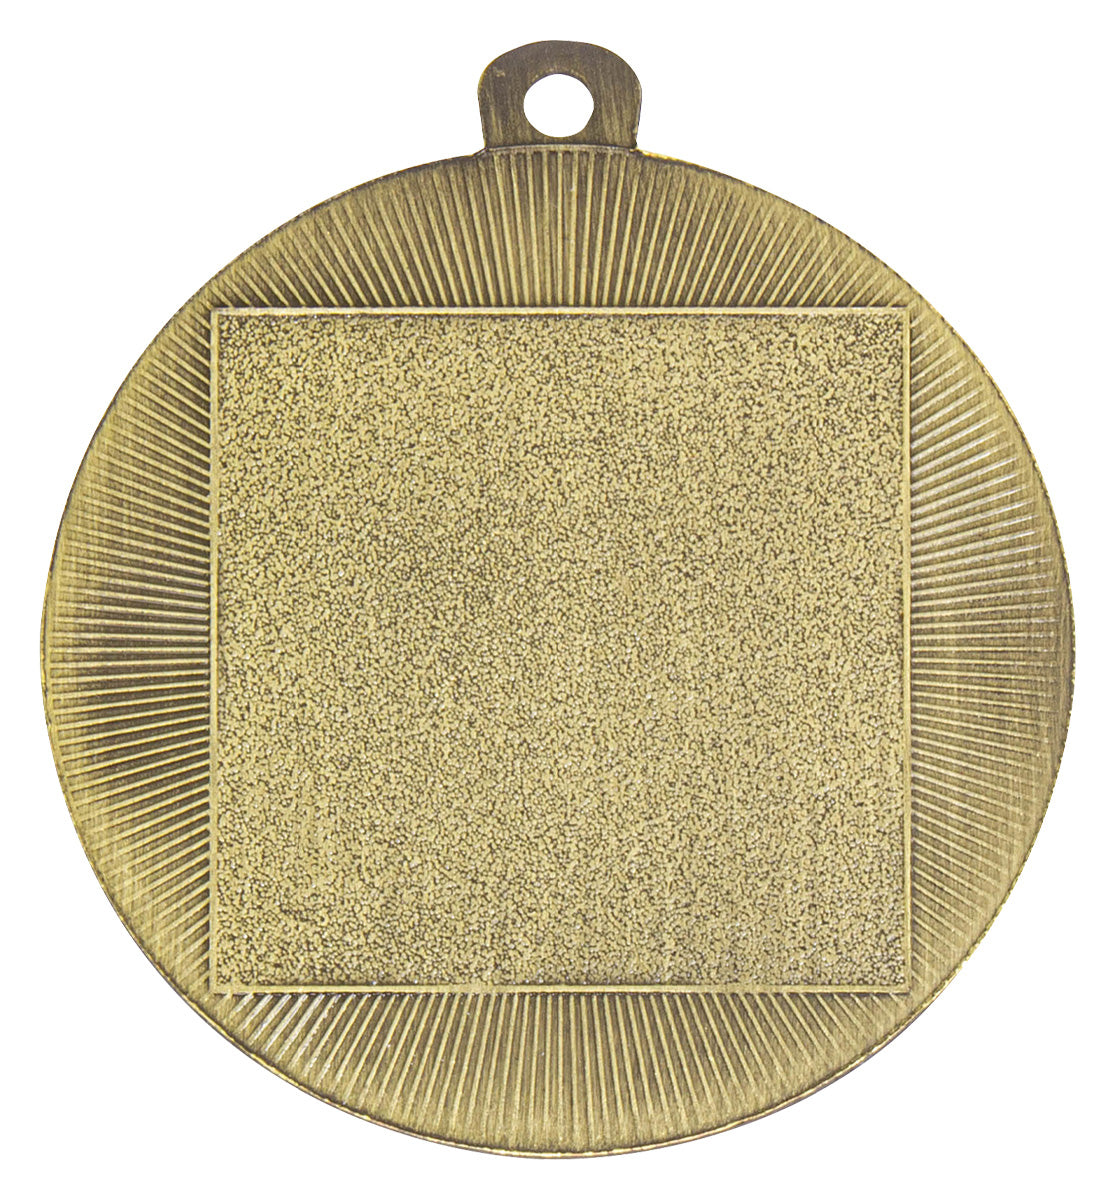 Wayfare Swimming Medal - No Insert